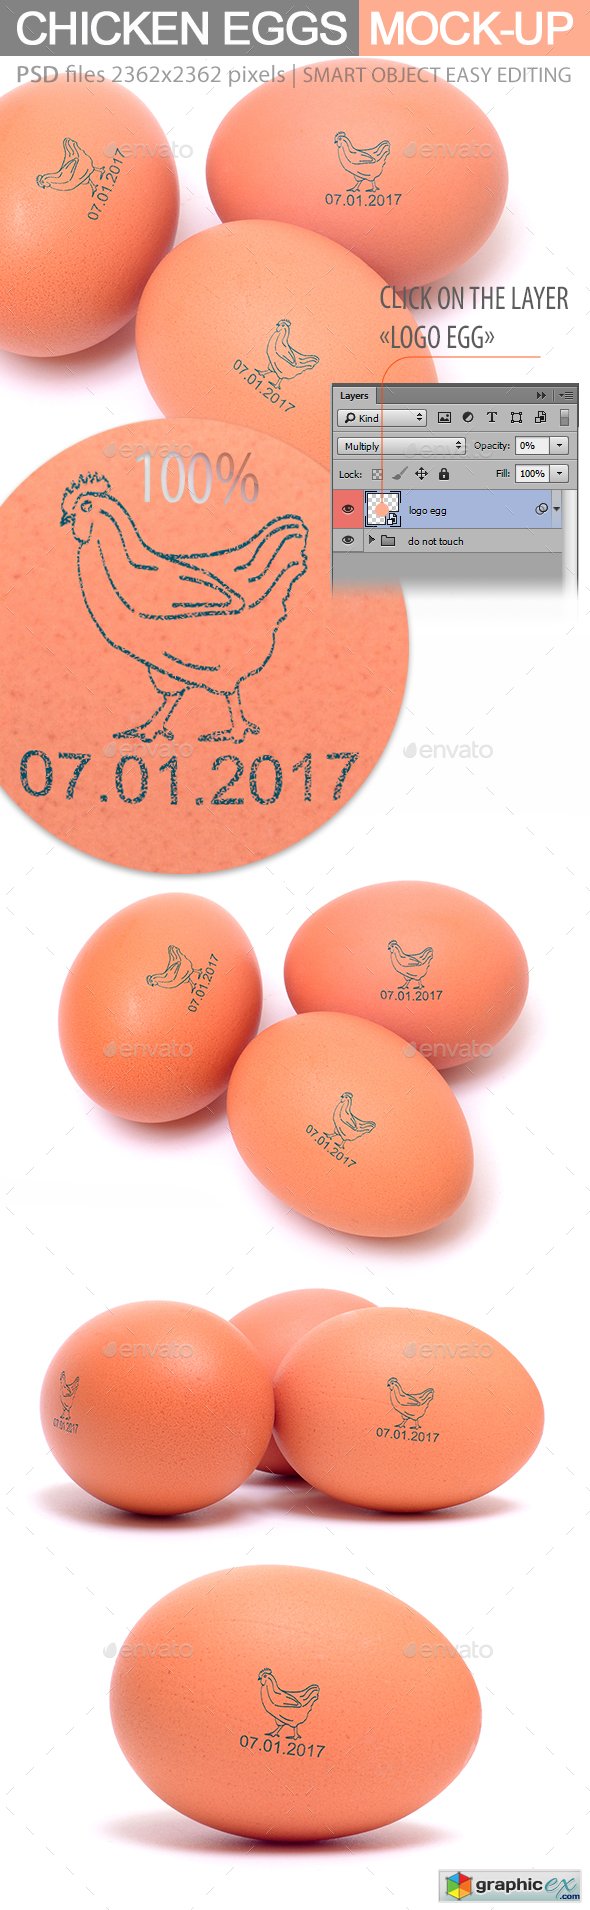 Marking Eggs Mock-up